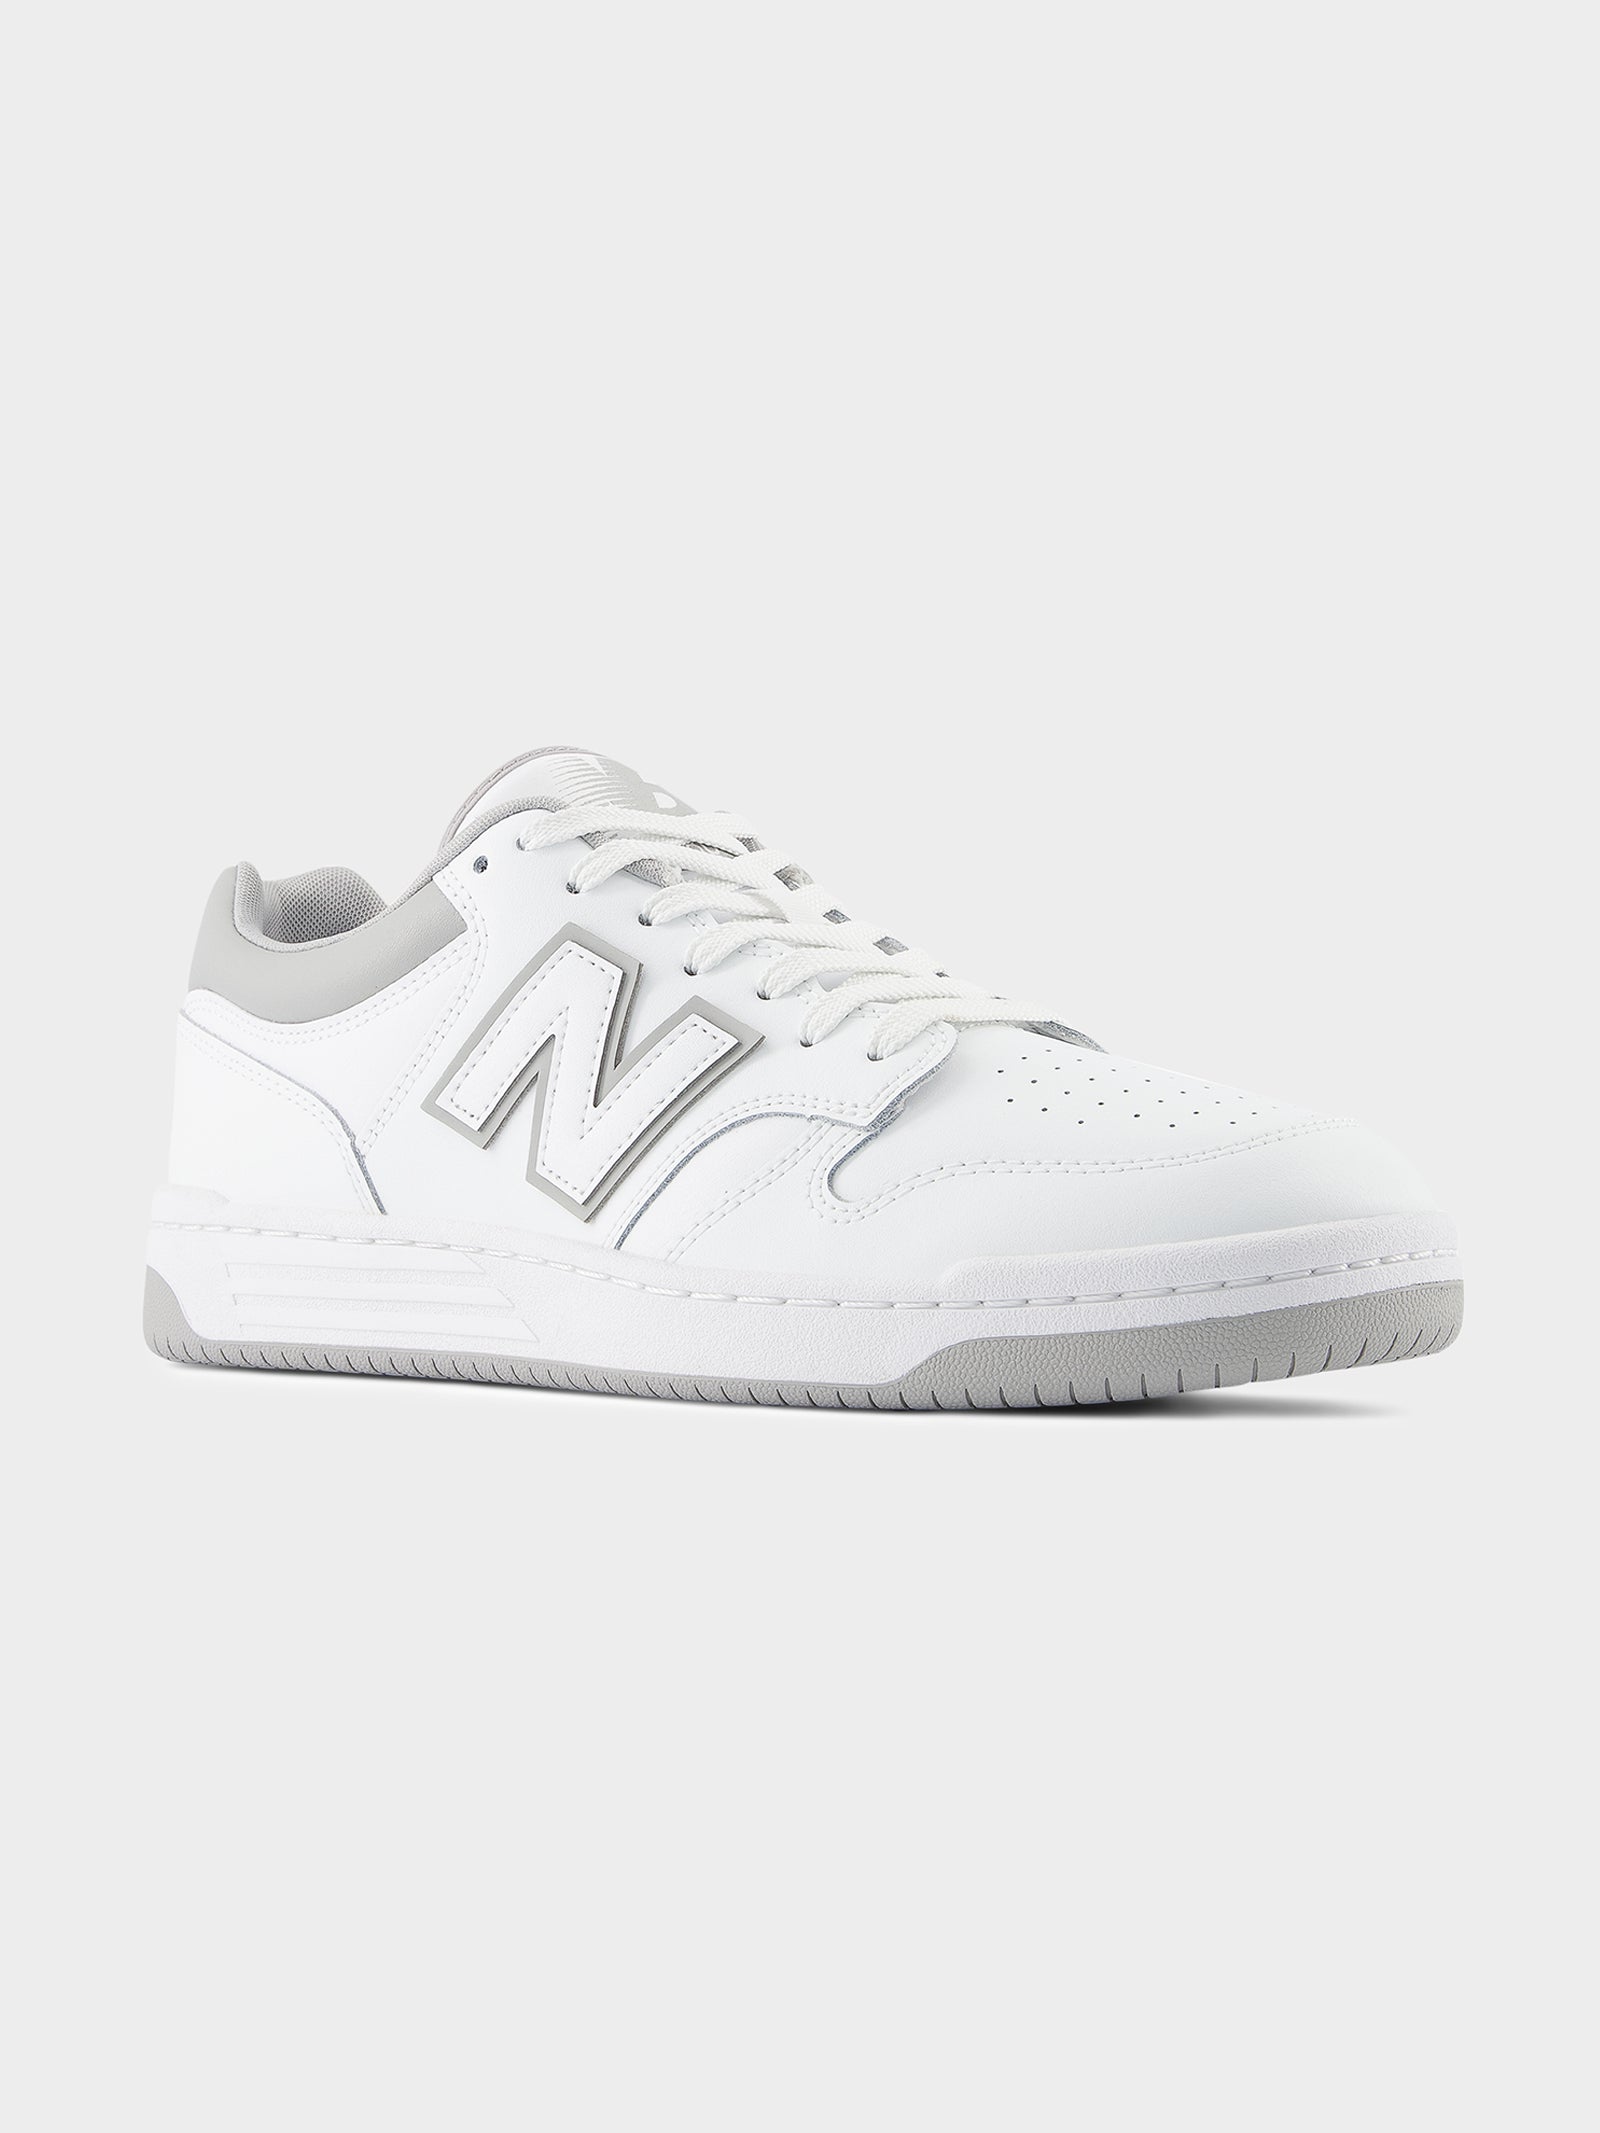 Unisex 480 Sneakers in White & Grey